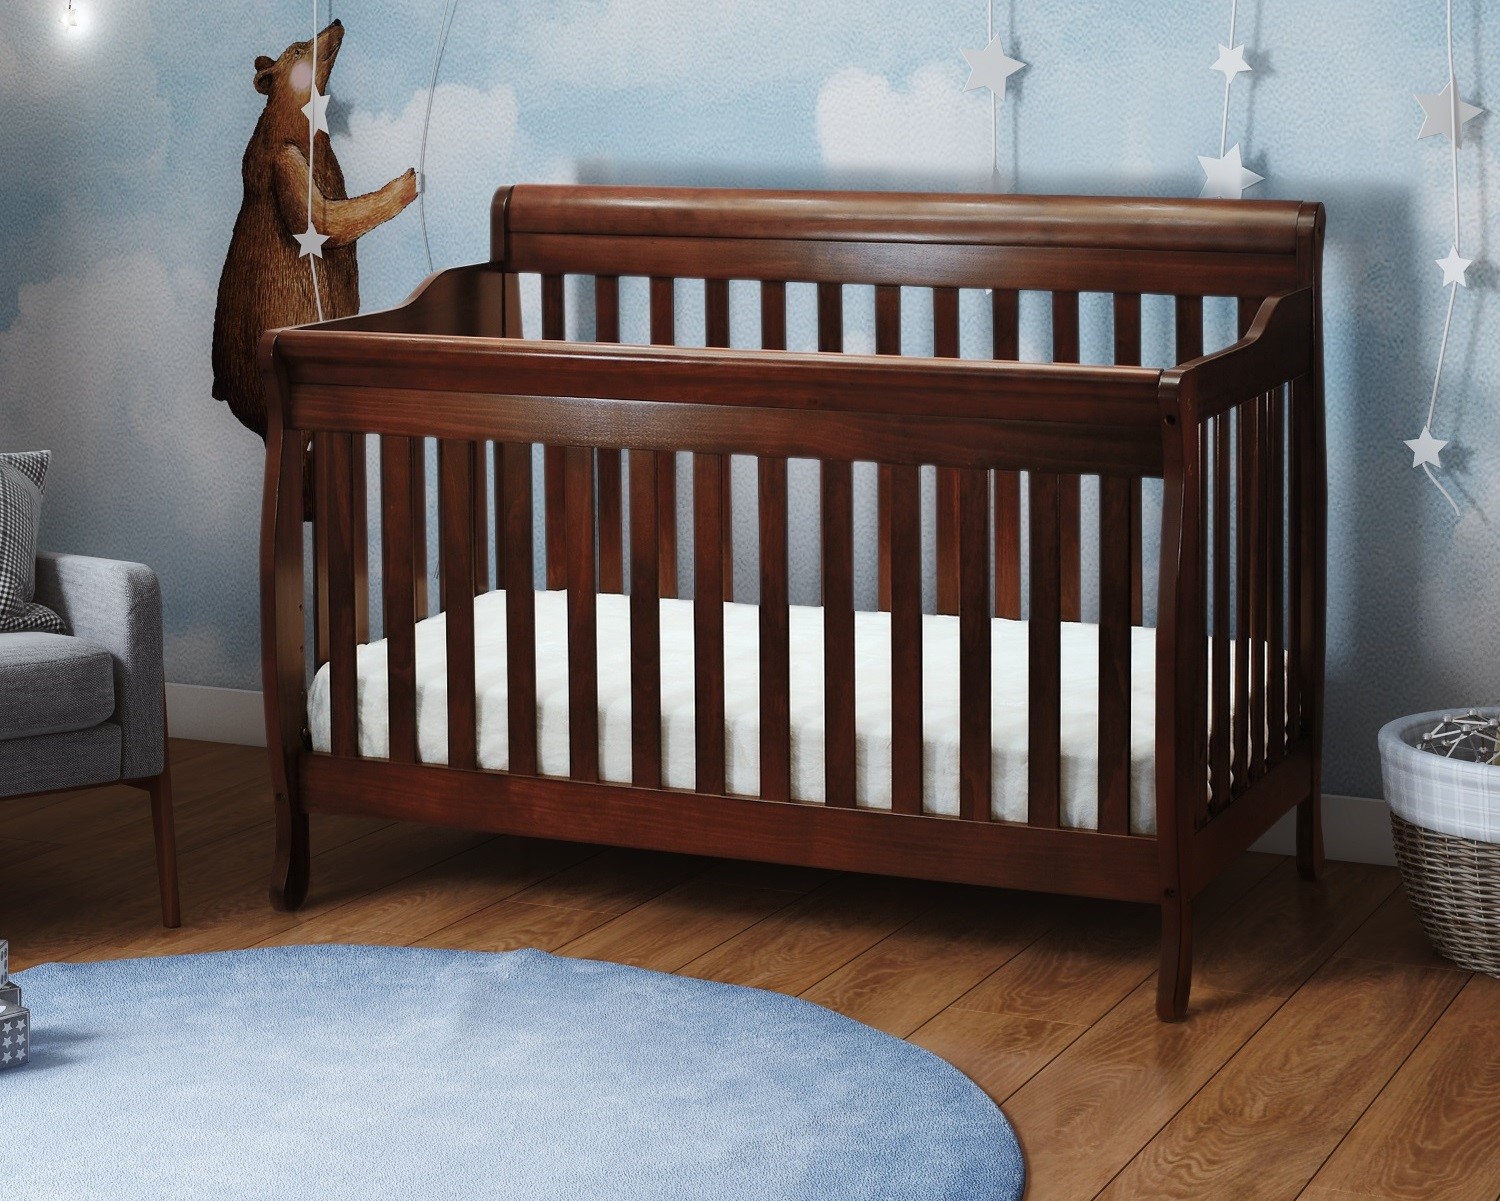 Rockabye baby AFG Athena Alice 3 in 1 Convertible Crib with Toddler Rail - Espresso -